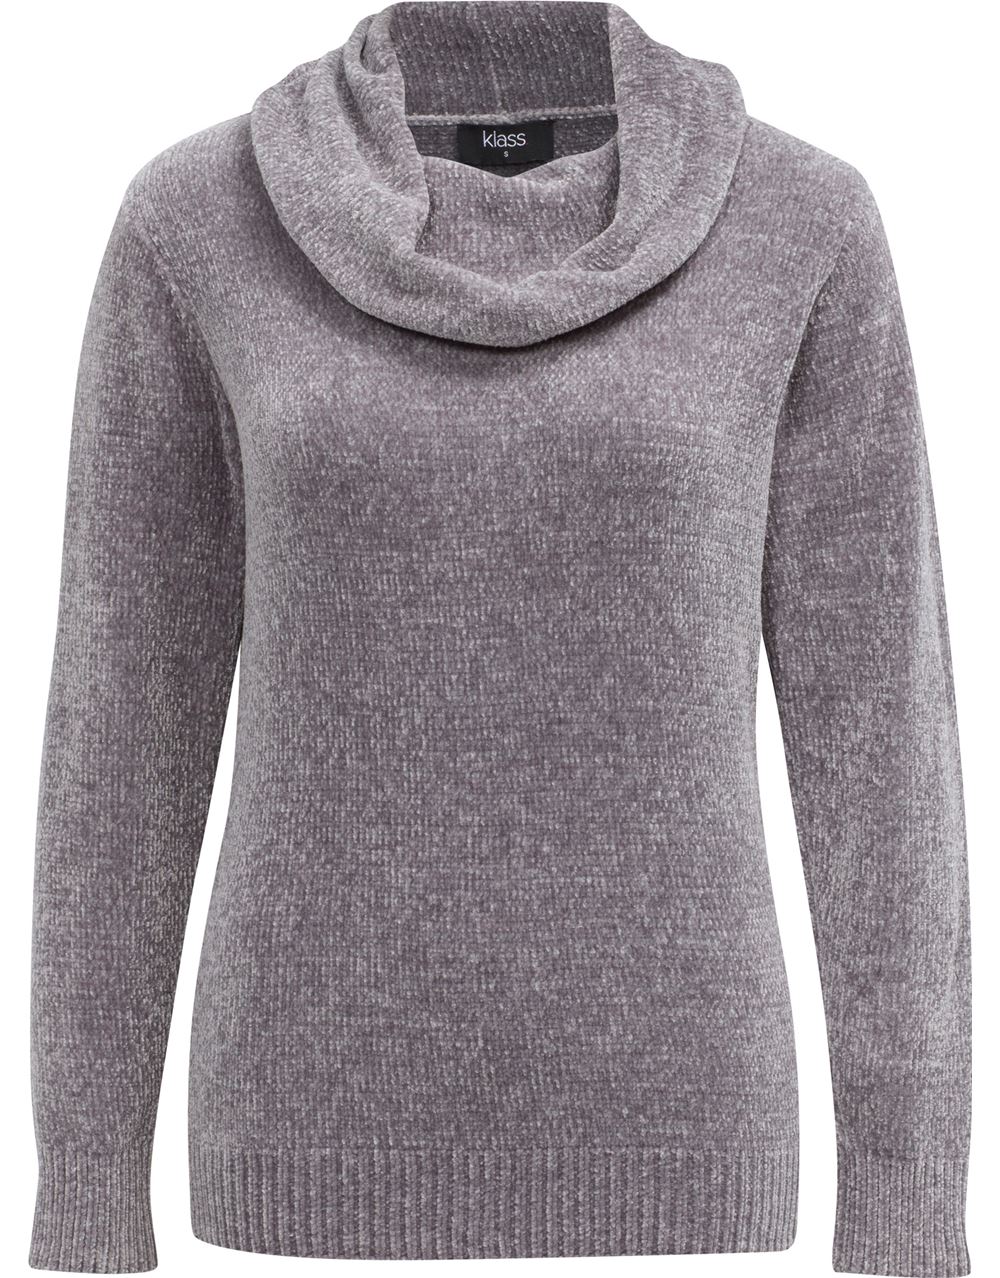 Cowl Neck Long Sleeve Chenille Top in Grey | Klass